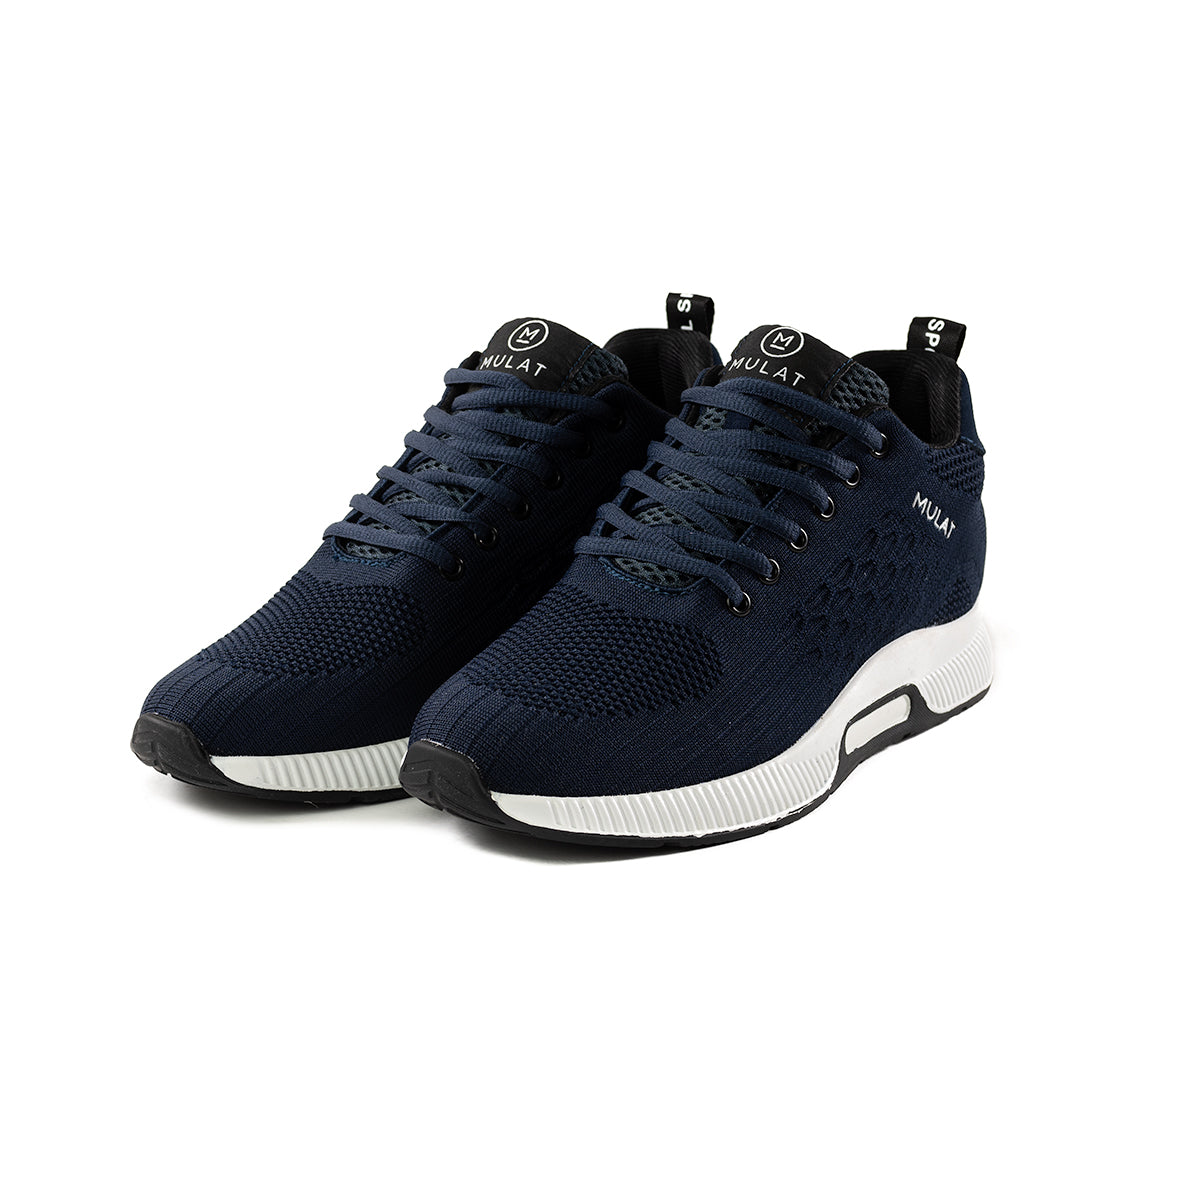 Mulat Ultraplex Sneakers Navy Blau (6 zm HÖHEN-BOOST)